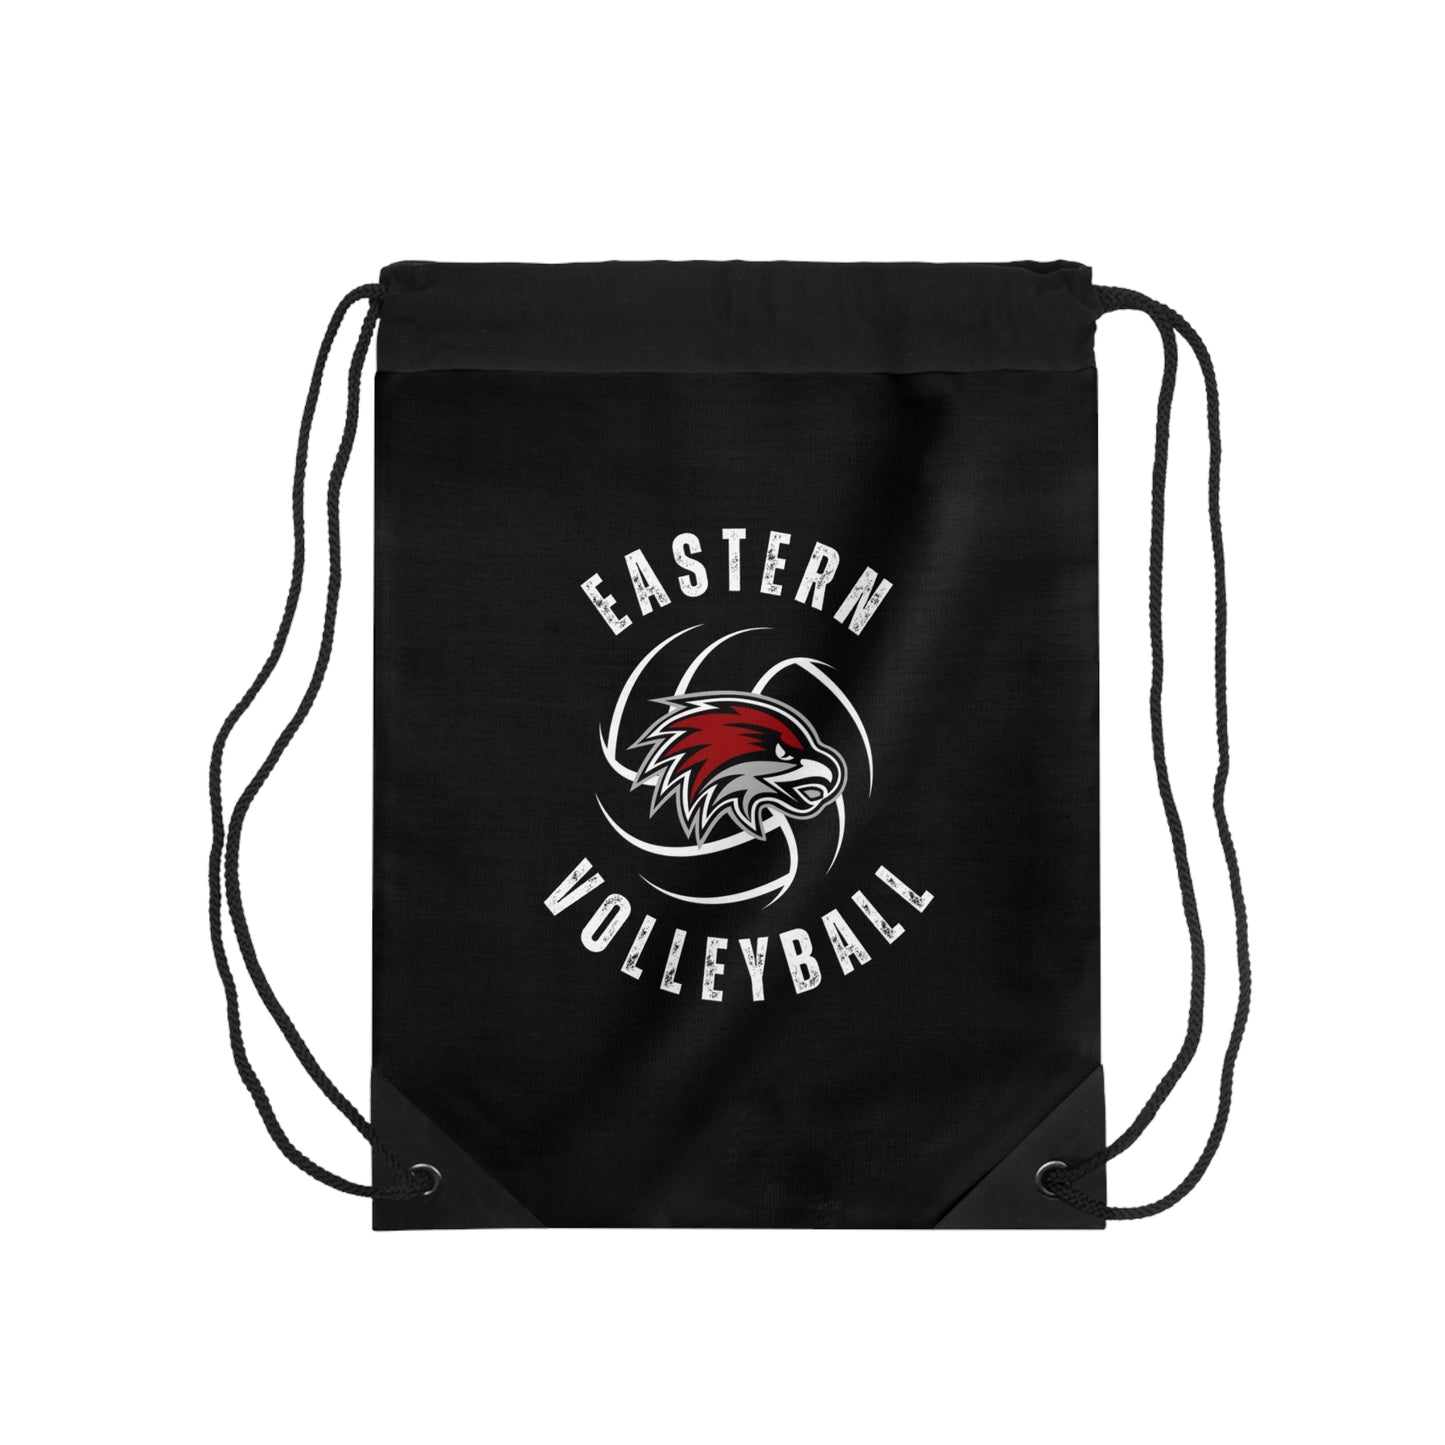 Eastern Volleyball Drawstring Bag